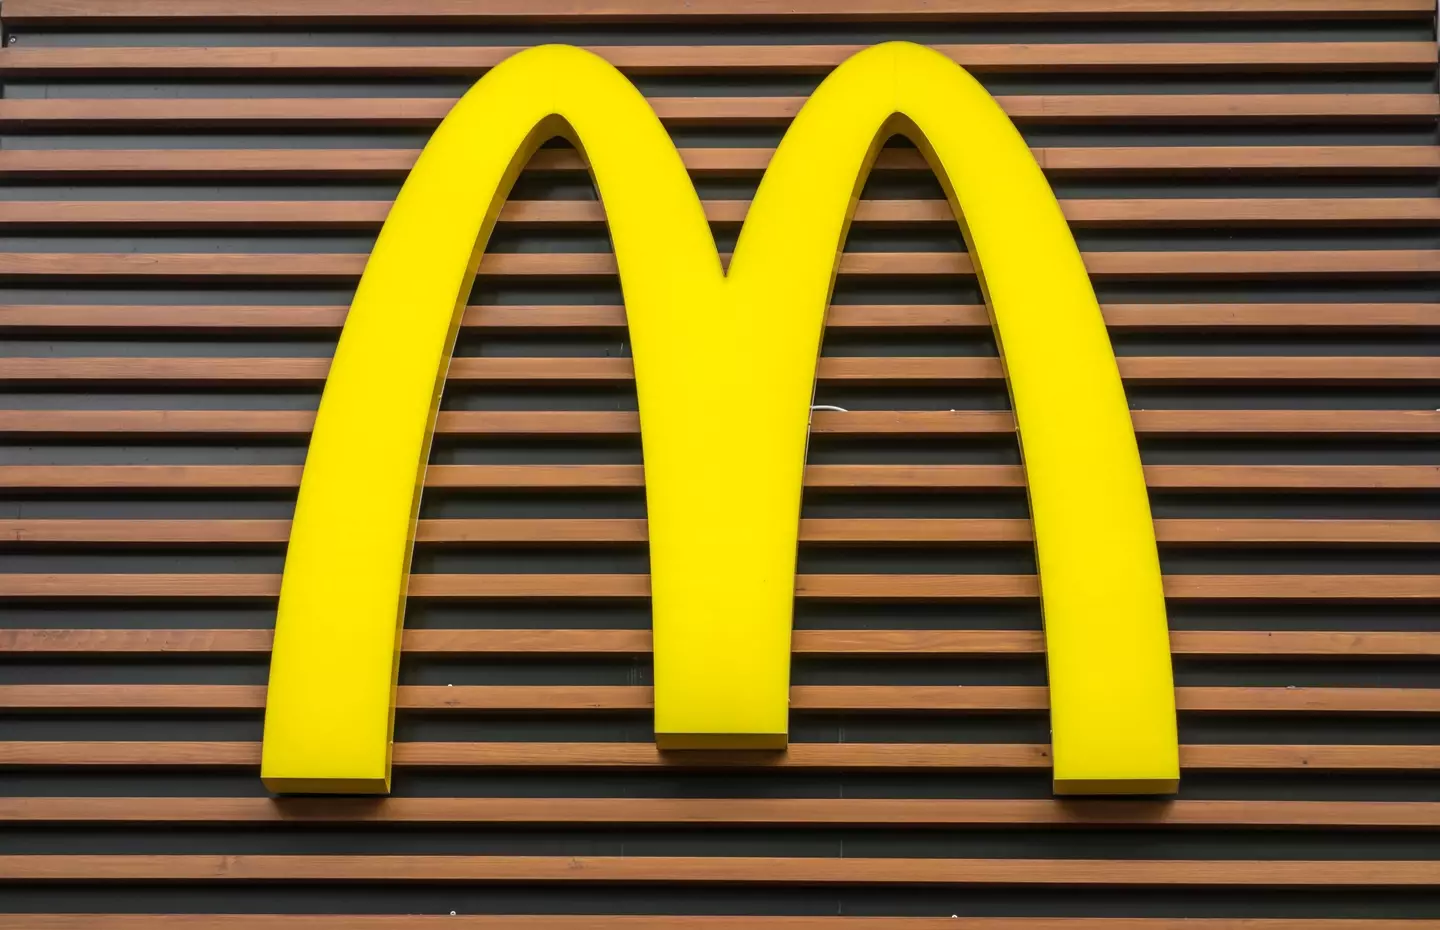 McDonald's logo on the wall